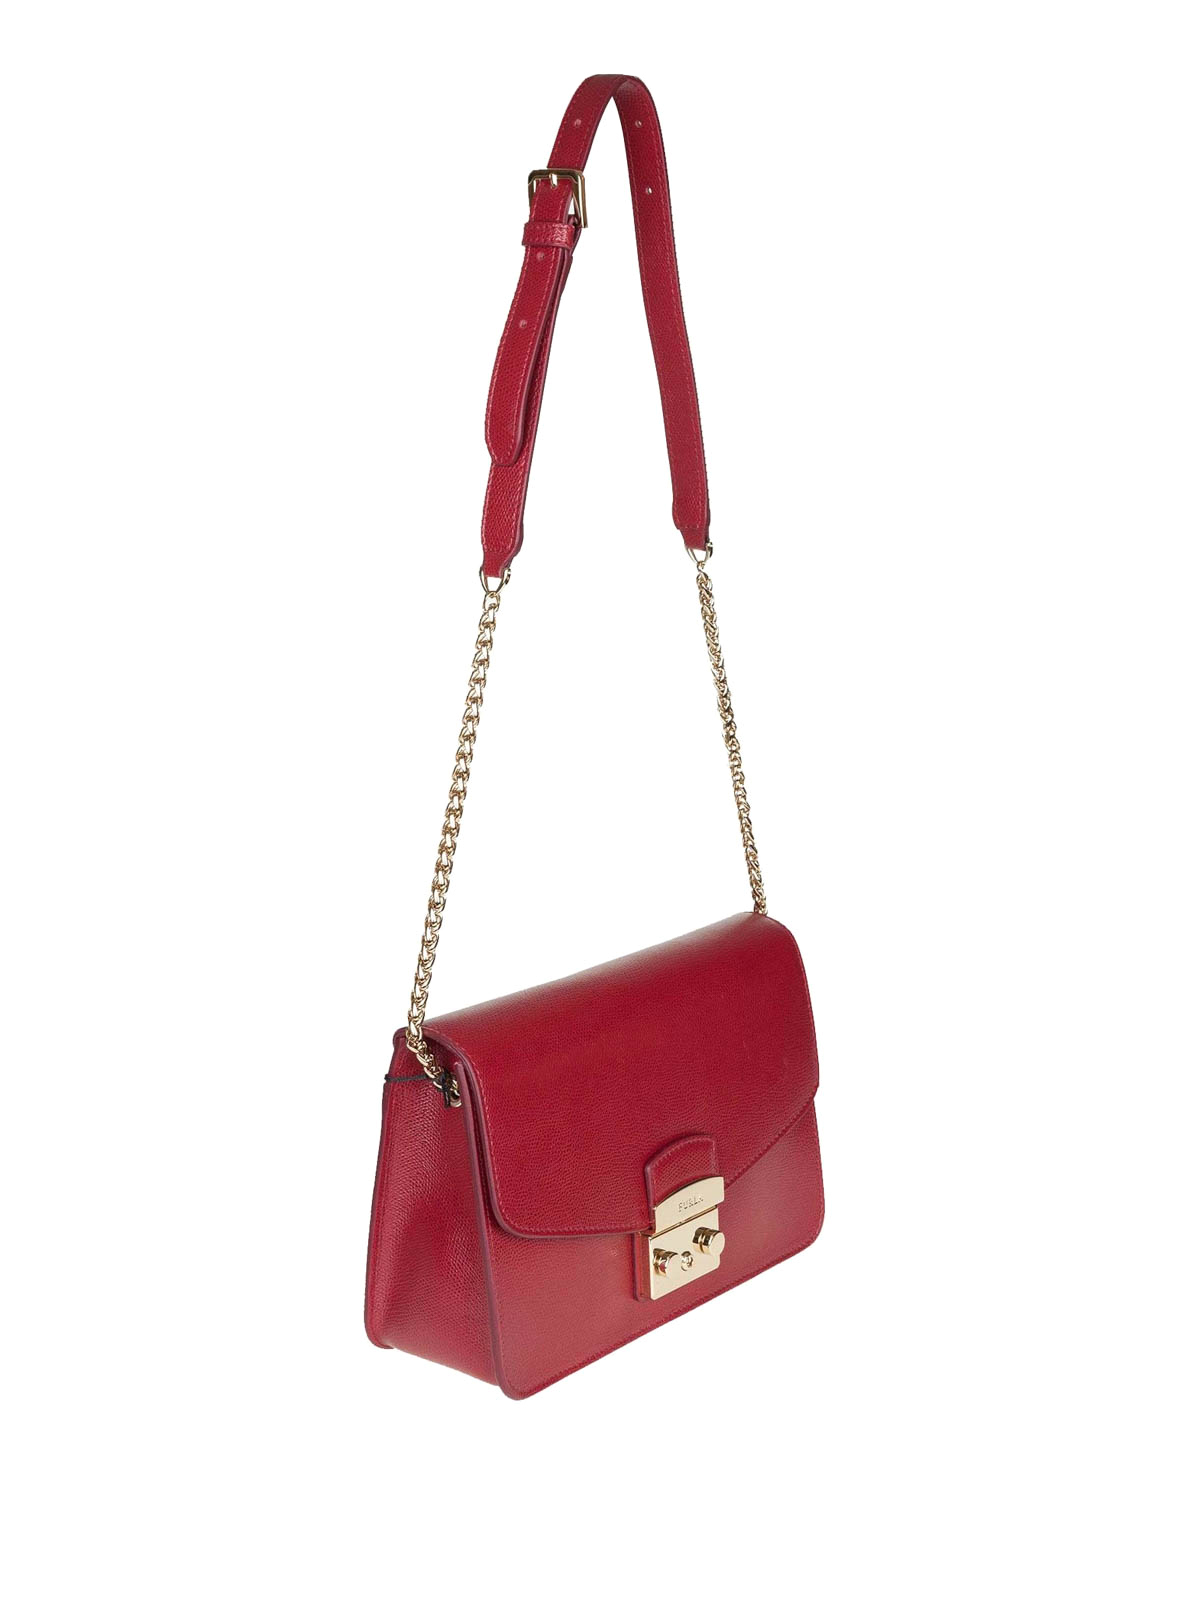 mix training Theseus Shoulder bags Furla - Metropolis red textured leather small bag - 986515